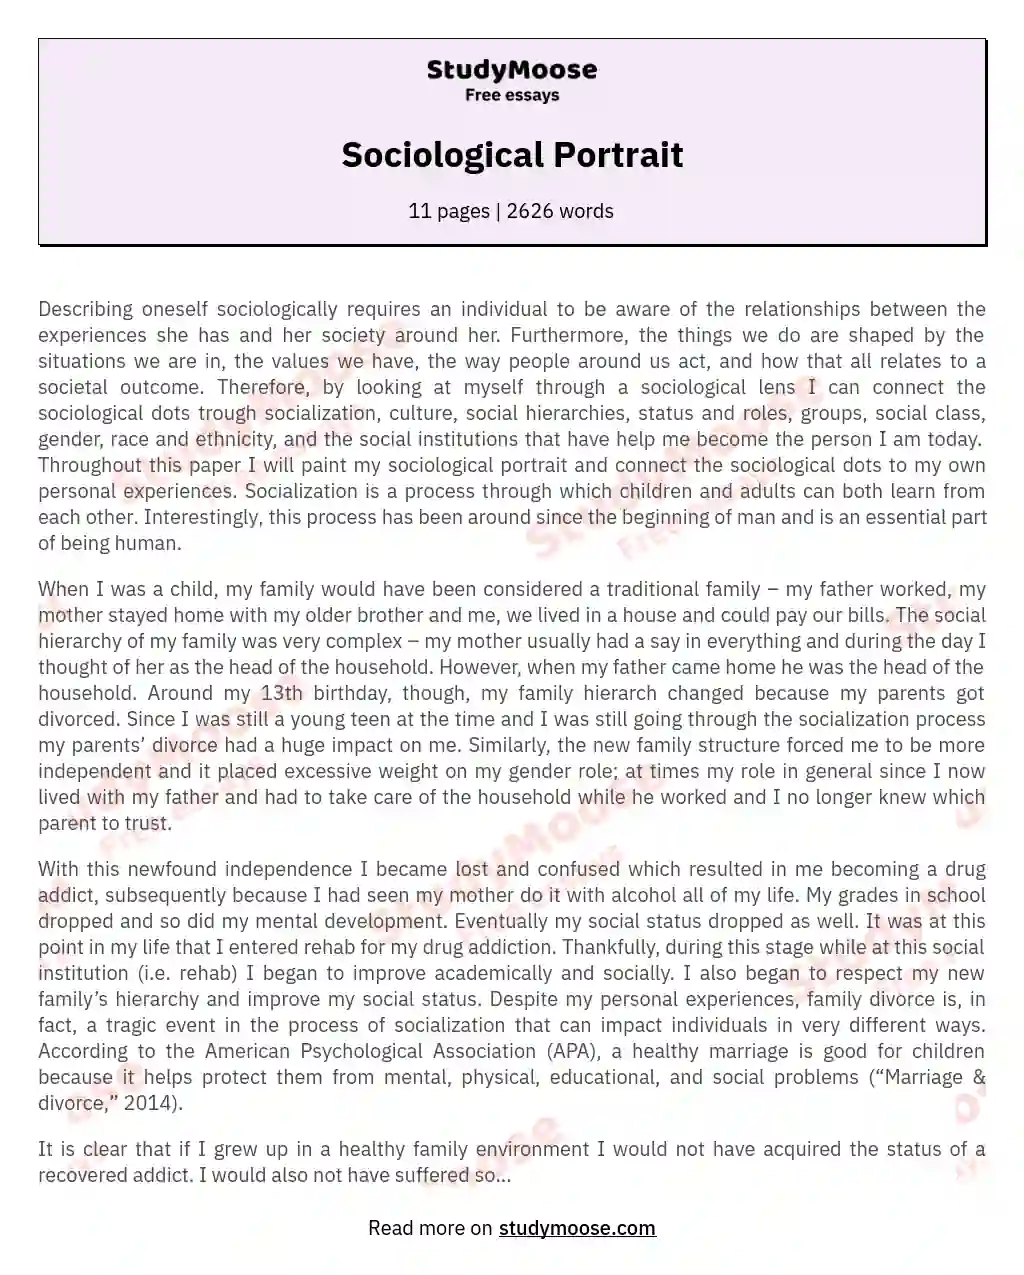 Sociological Portrait essay